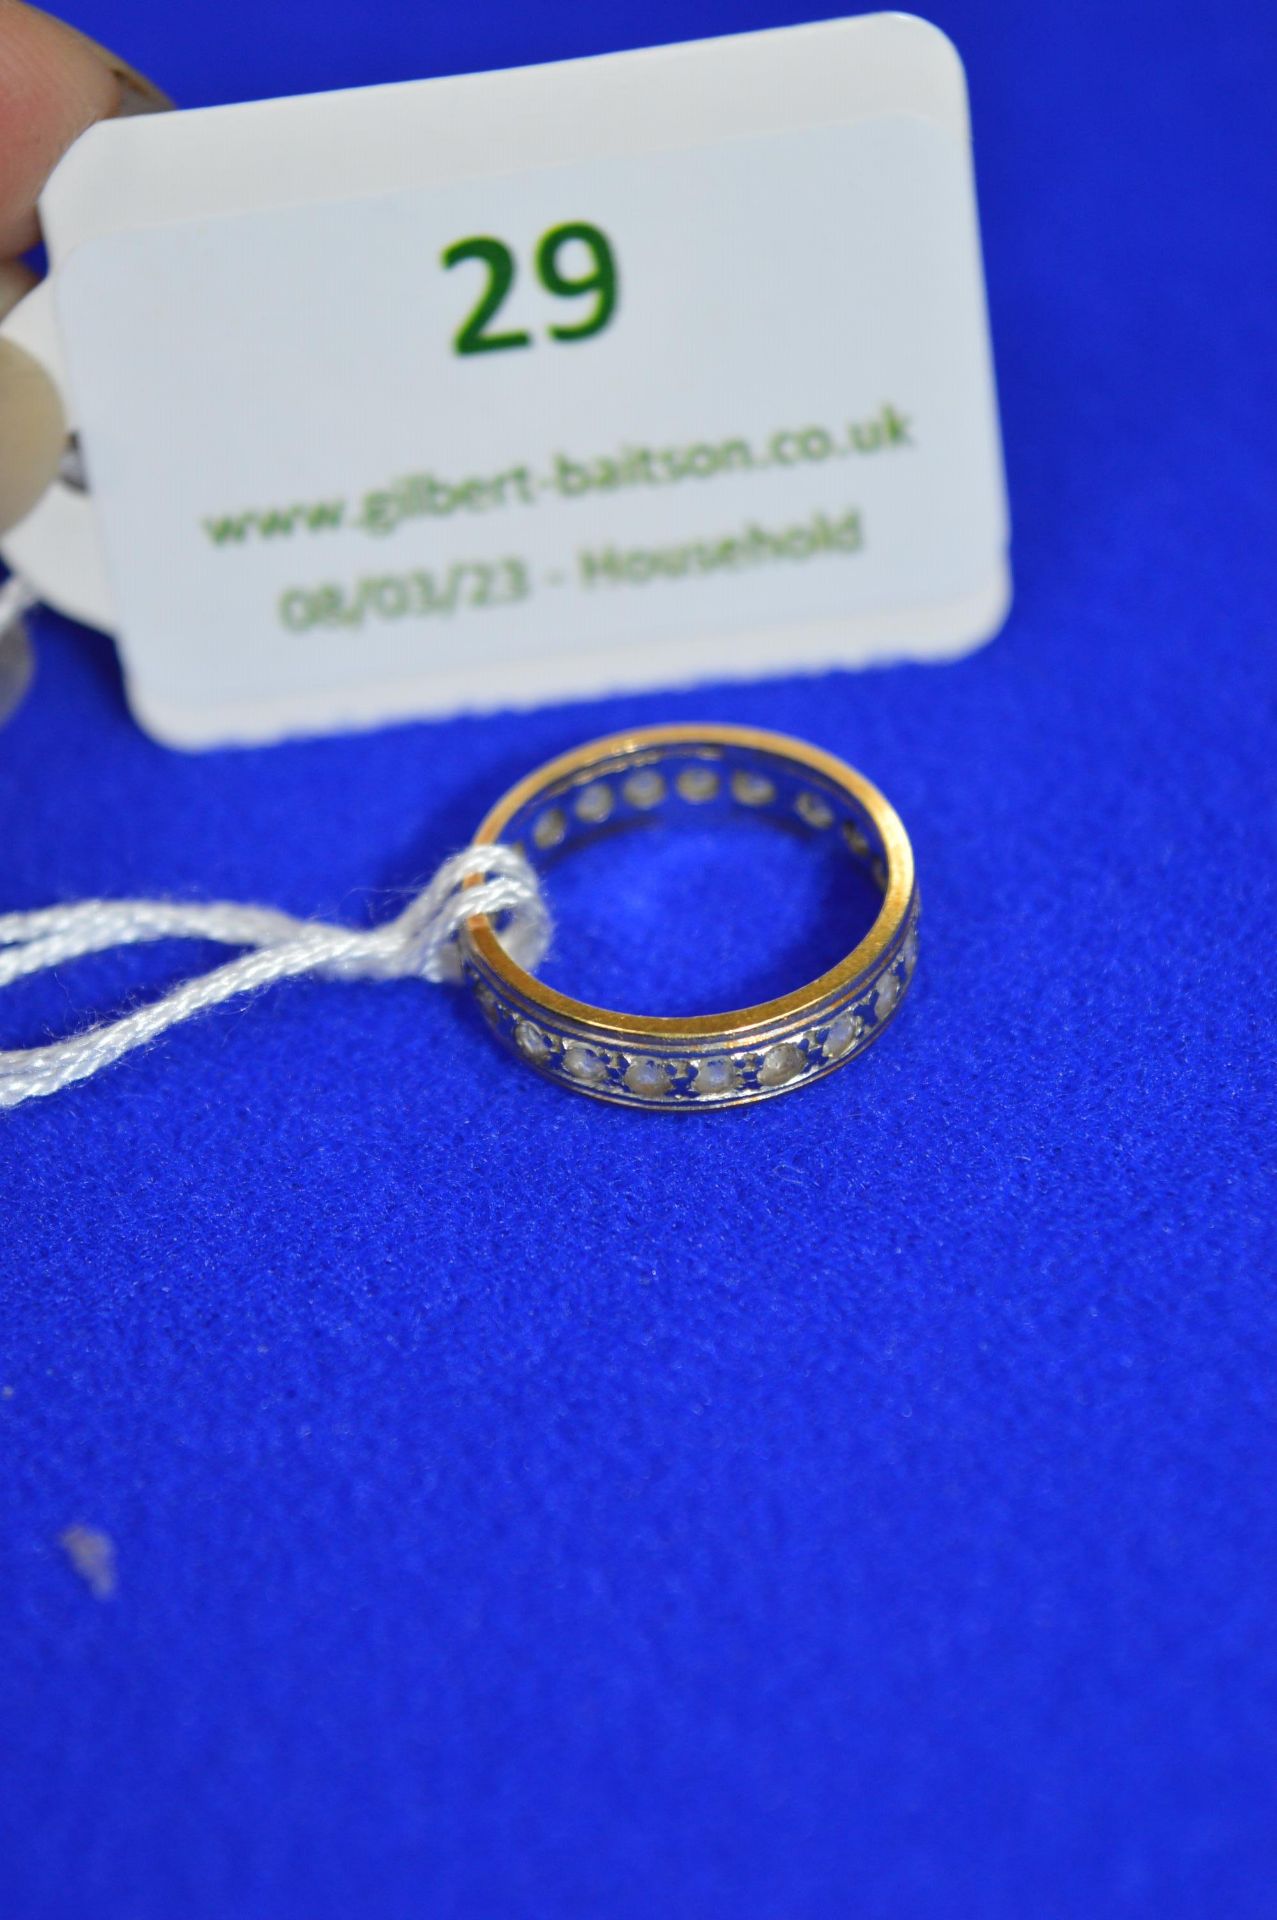 18k Gold Ring with Gemstones ~3.3g Size: J